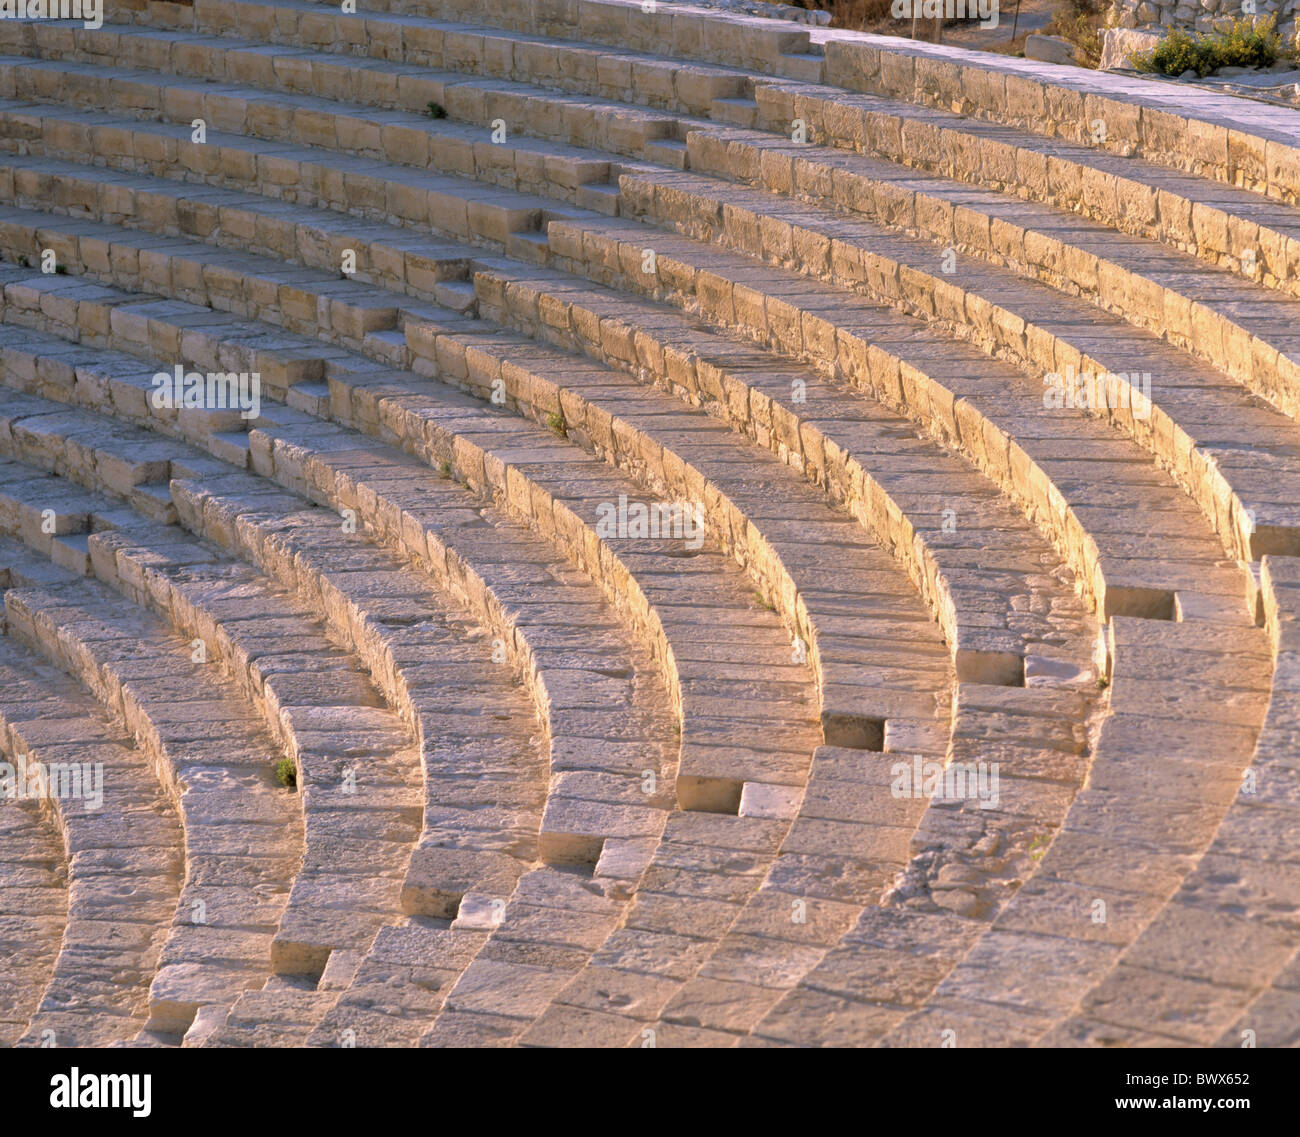 evening sun amphitheater curium culture rows Cyprus Ancient world antiquity Stock Photo